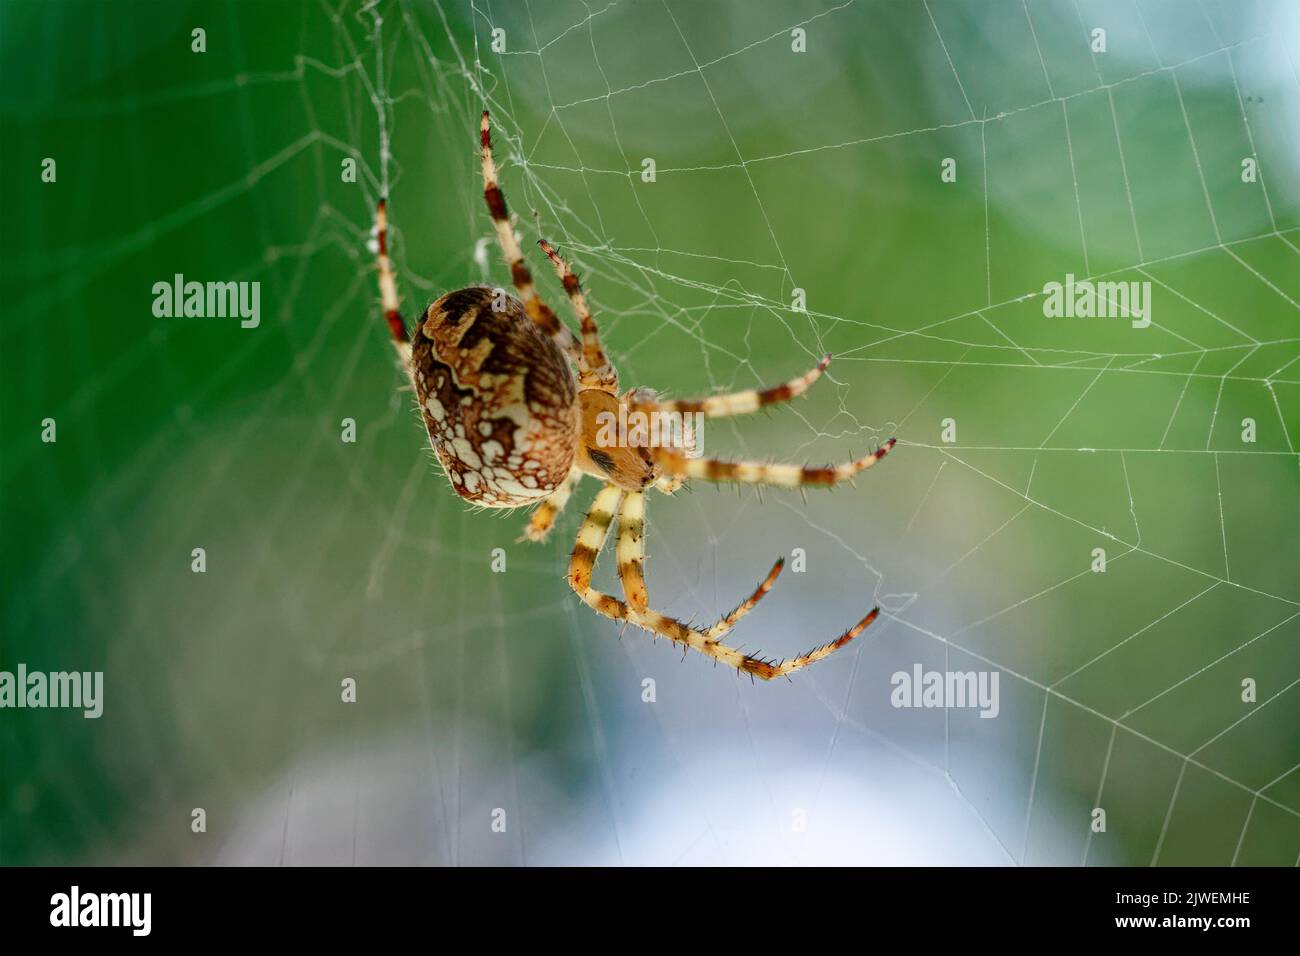 Araneus diadematus spider hunting in its web, macro shot Stock Photo